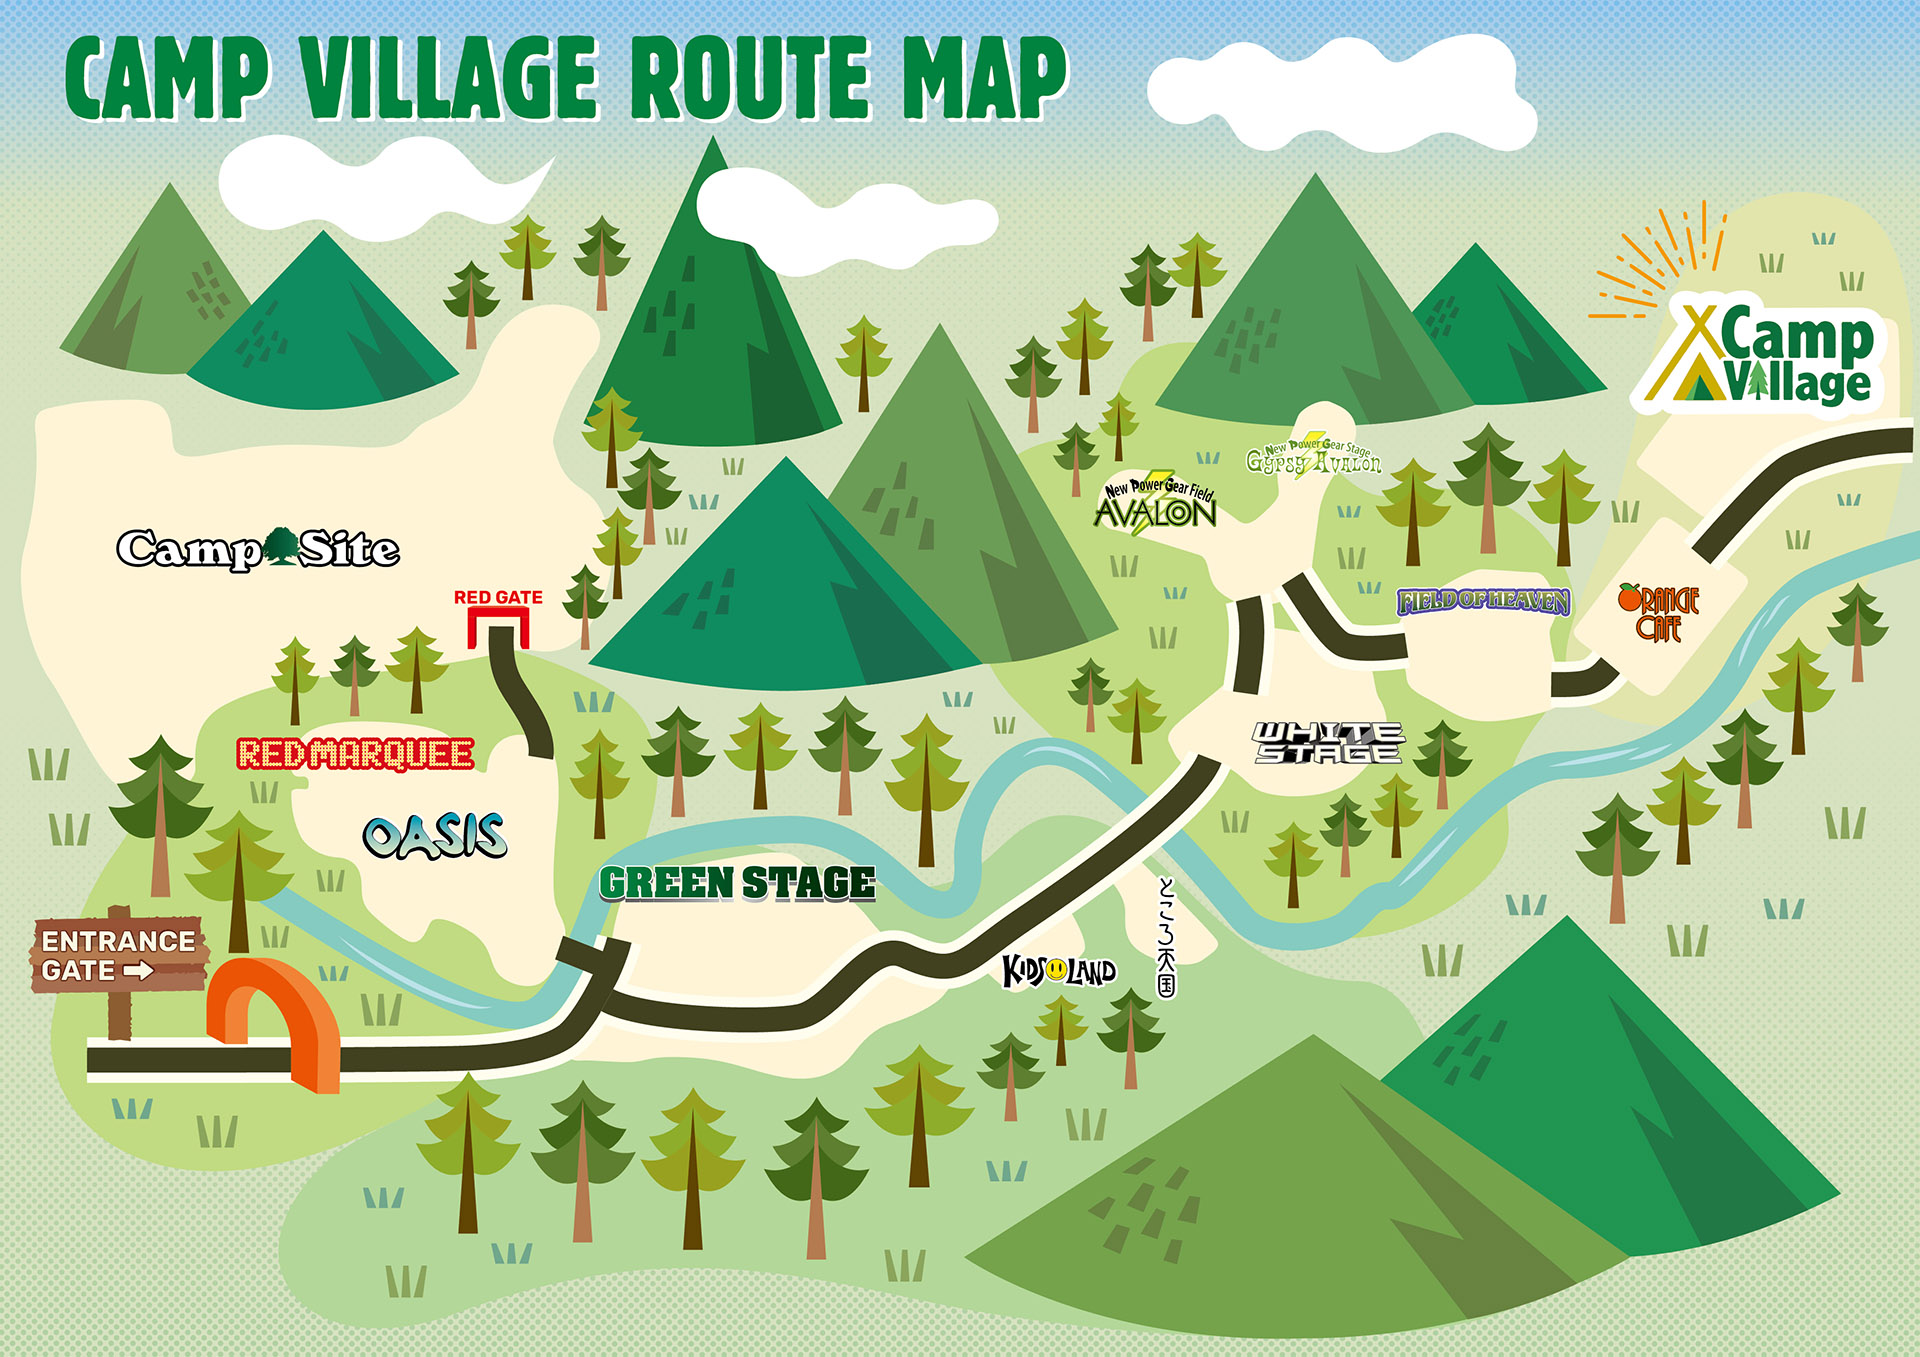 CAMP Village ROUTE MAP